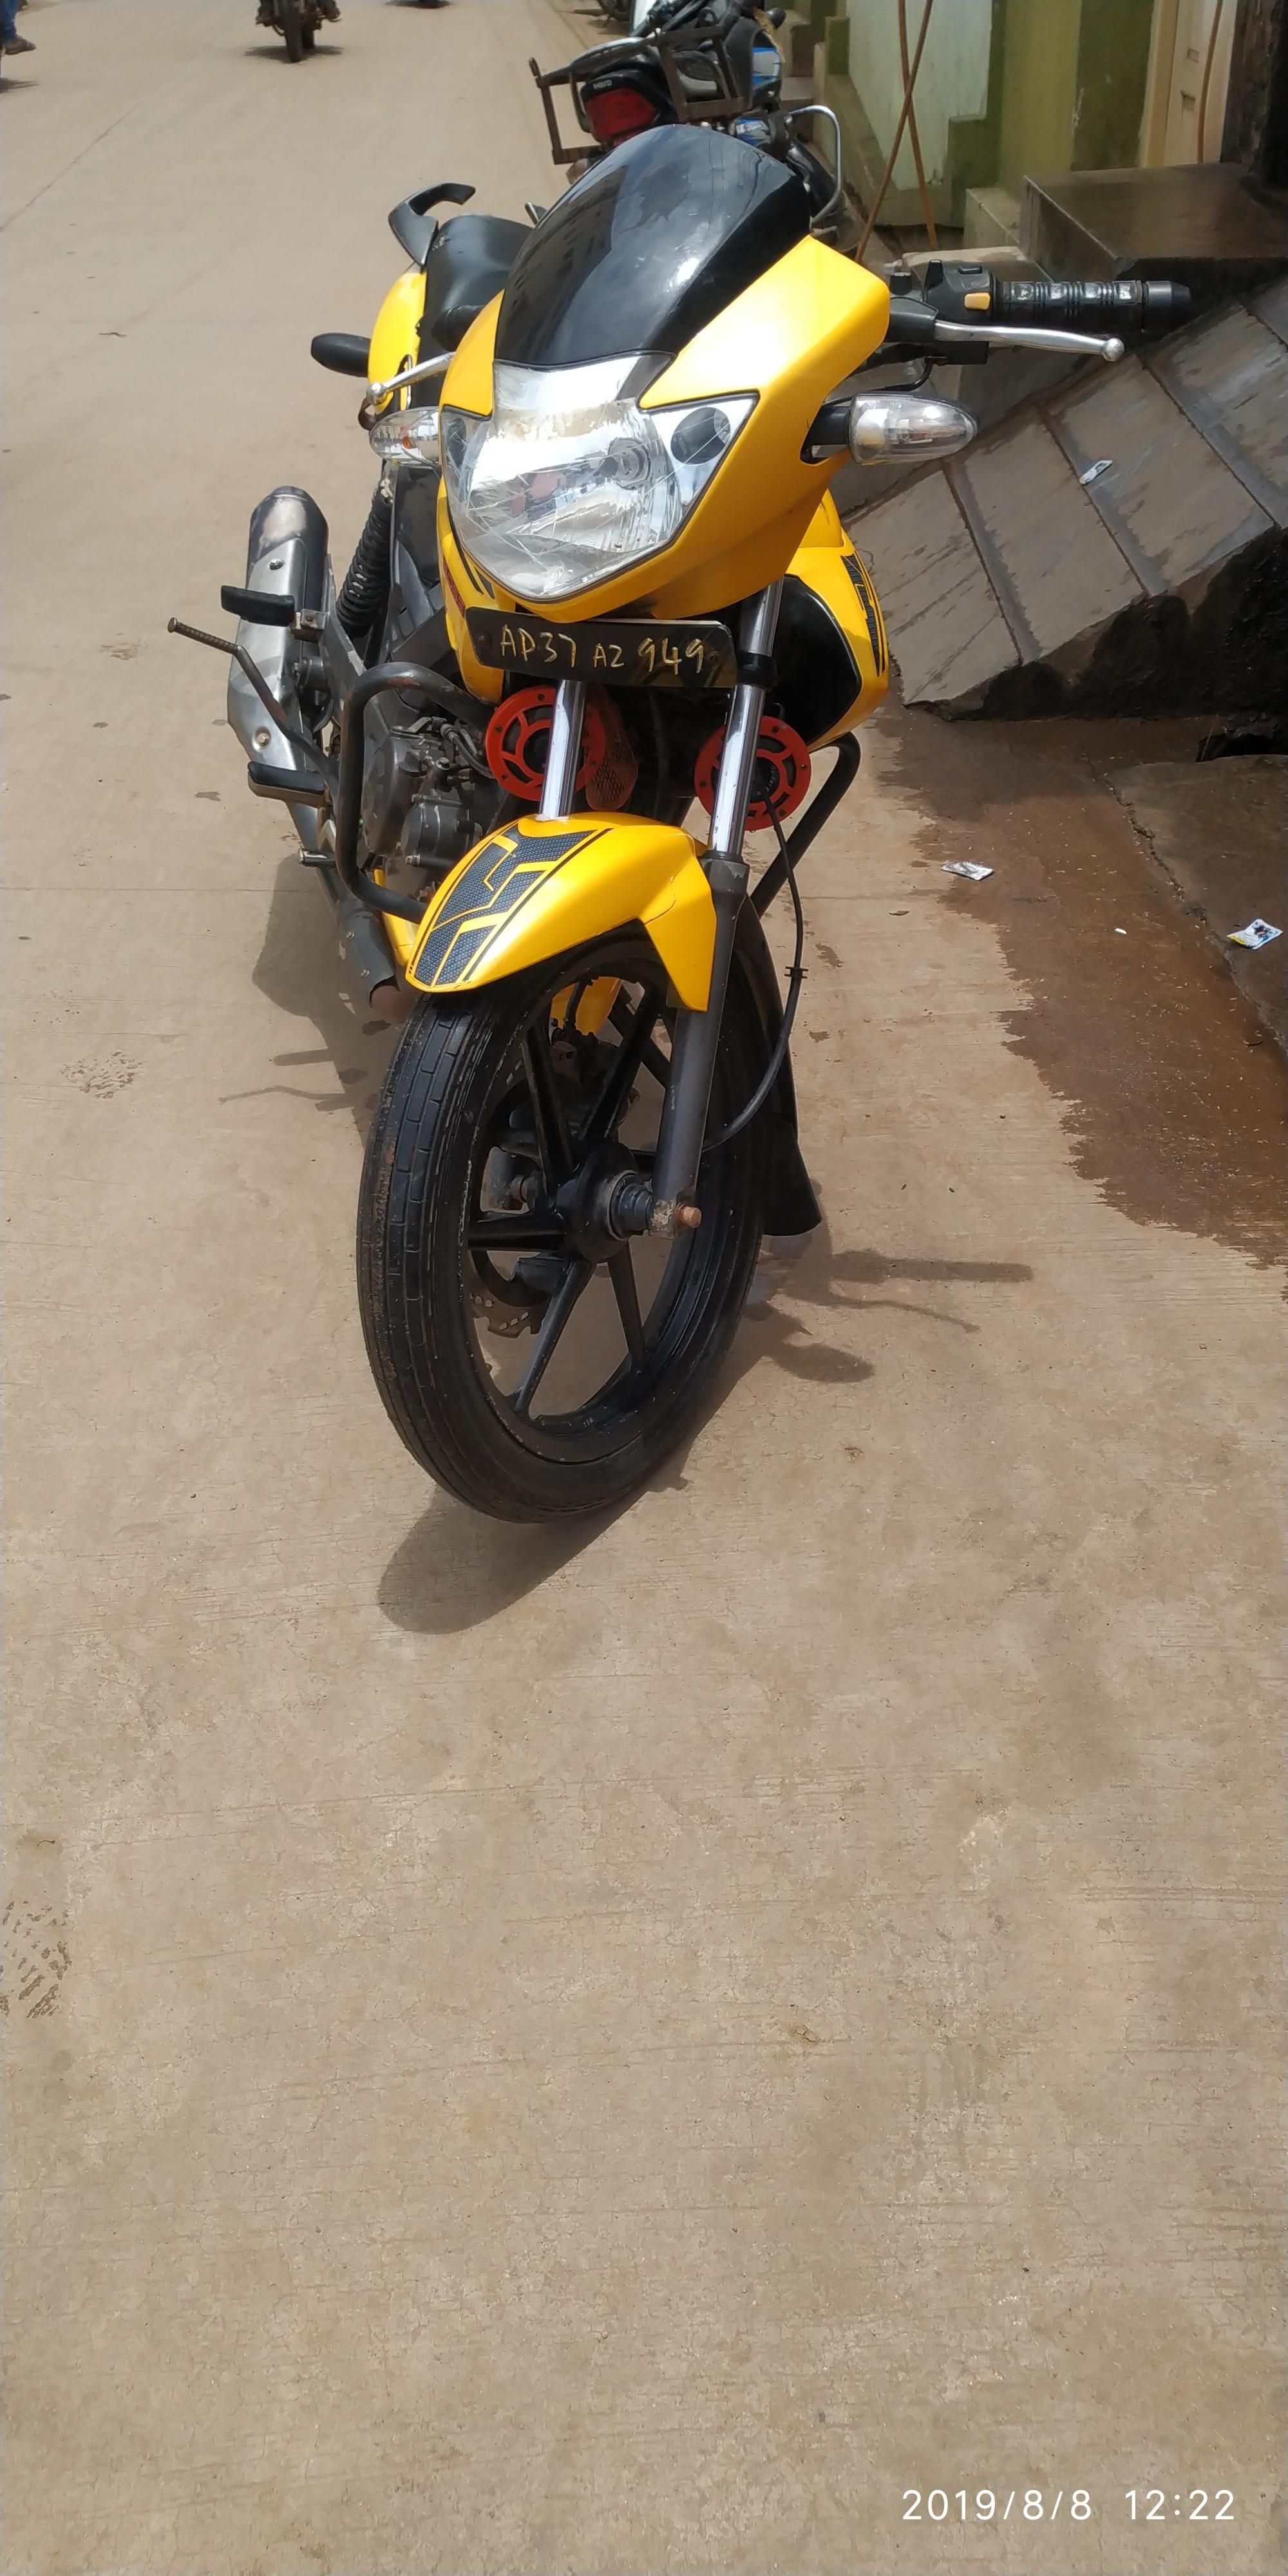 Tvs Apache Rtr Bike For Sale In Godavari Id Droom